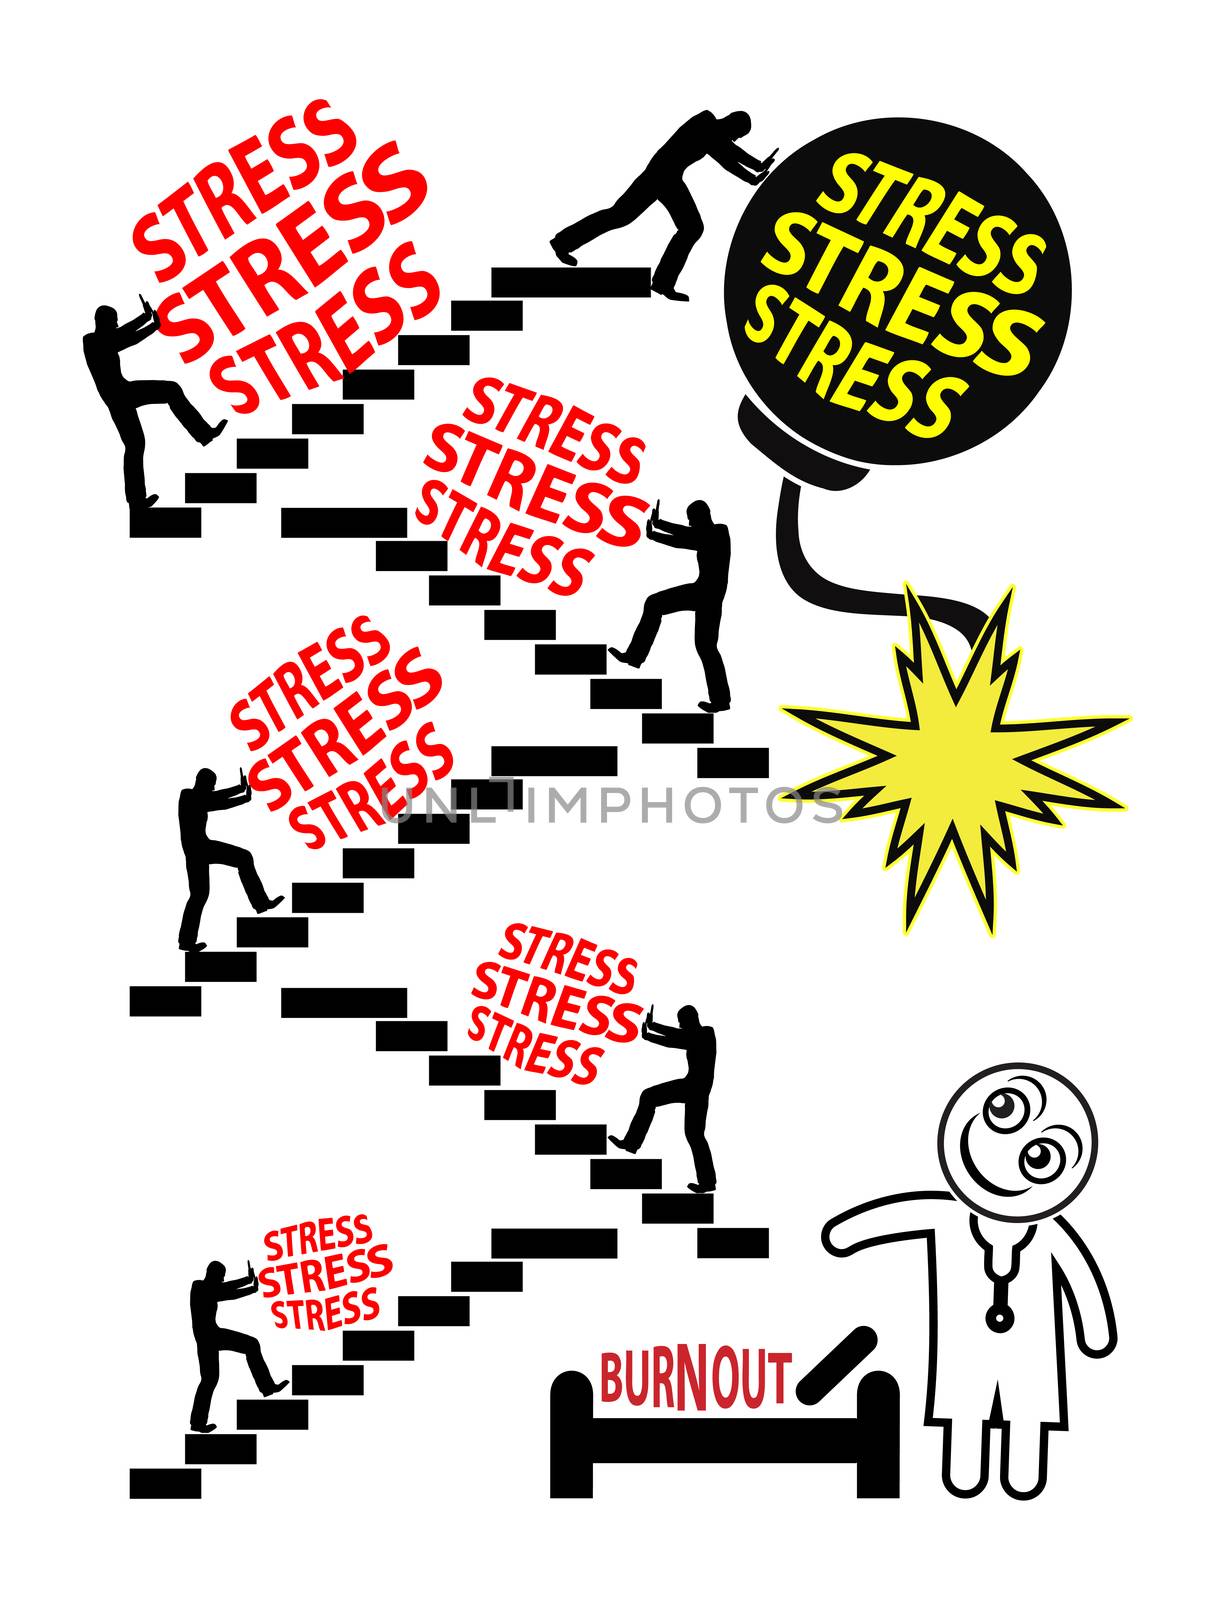 Stress makes you sick by Bambara